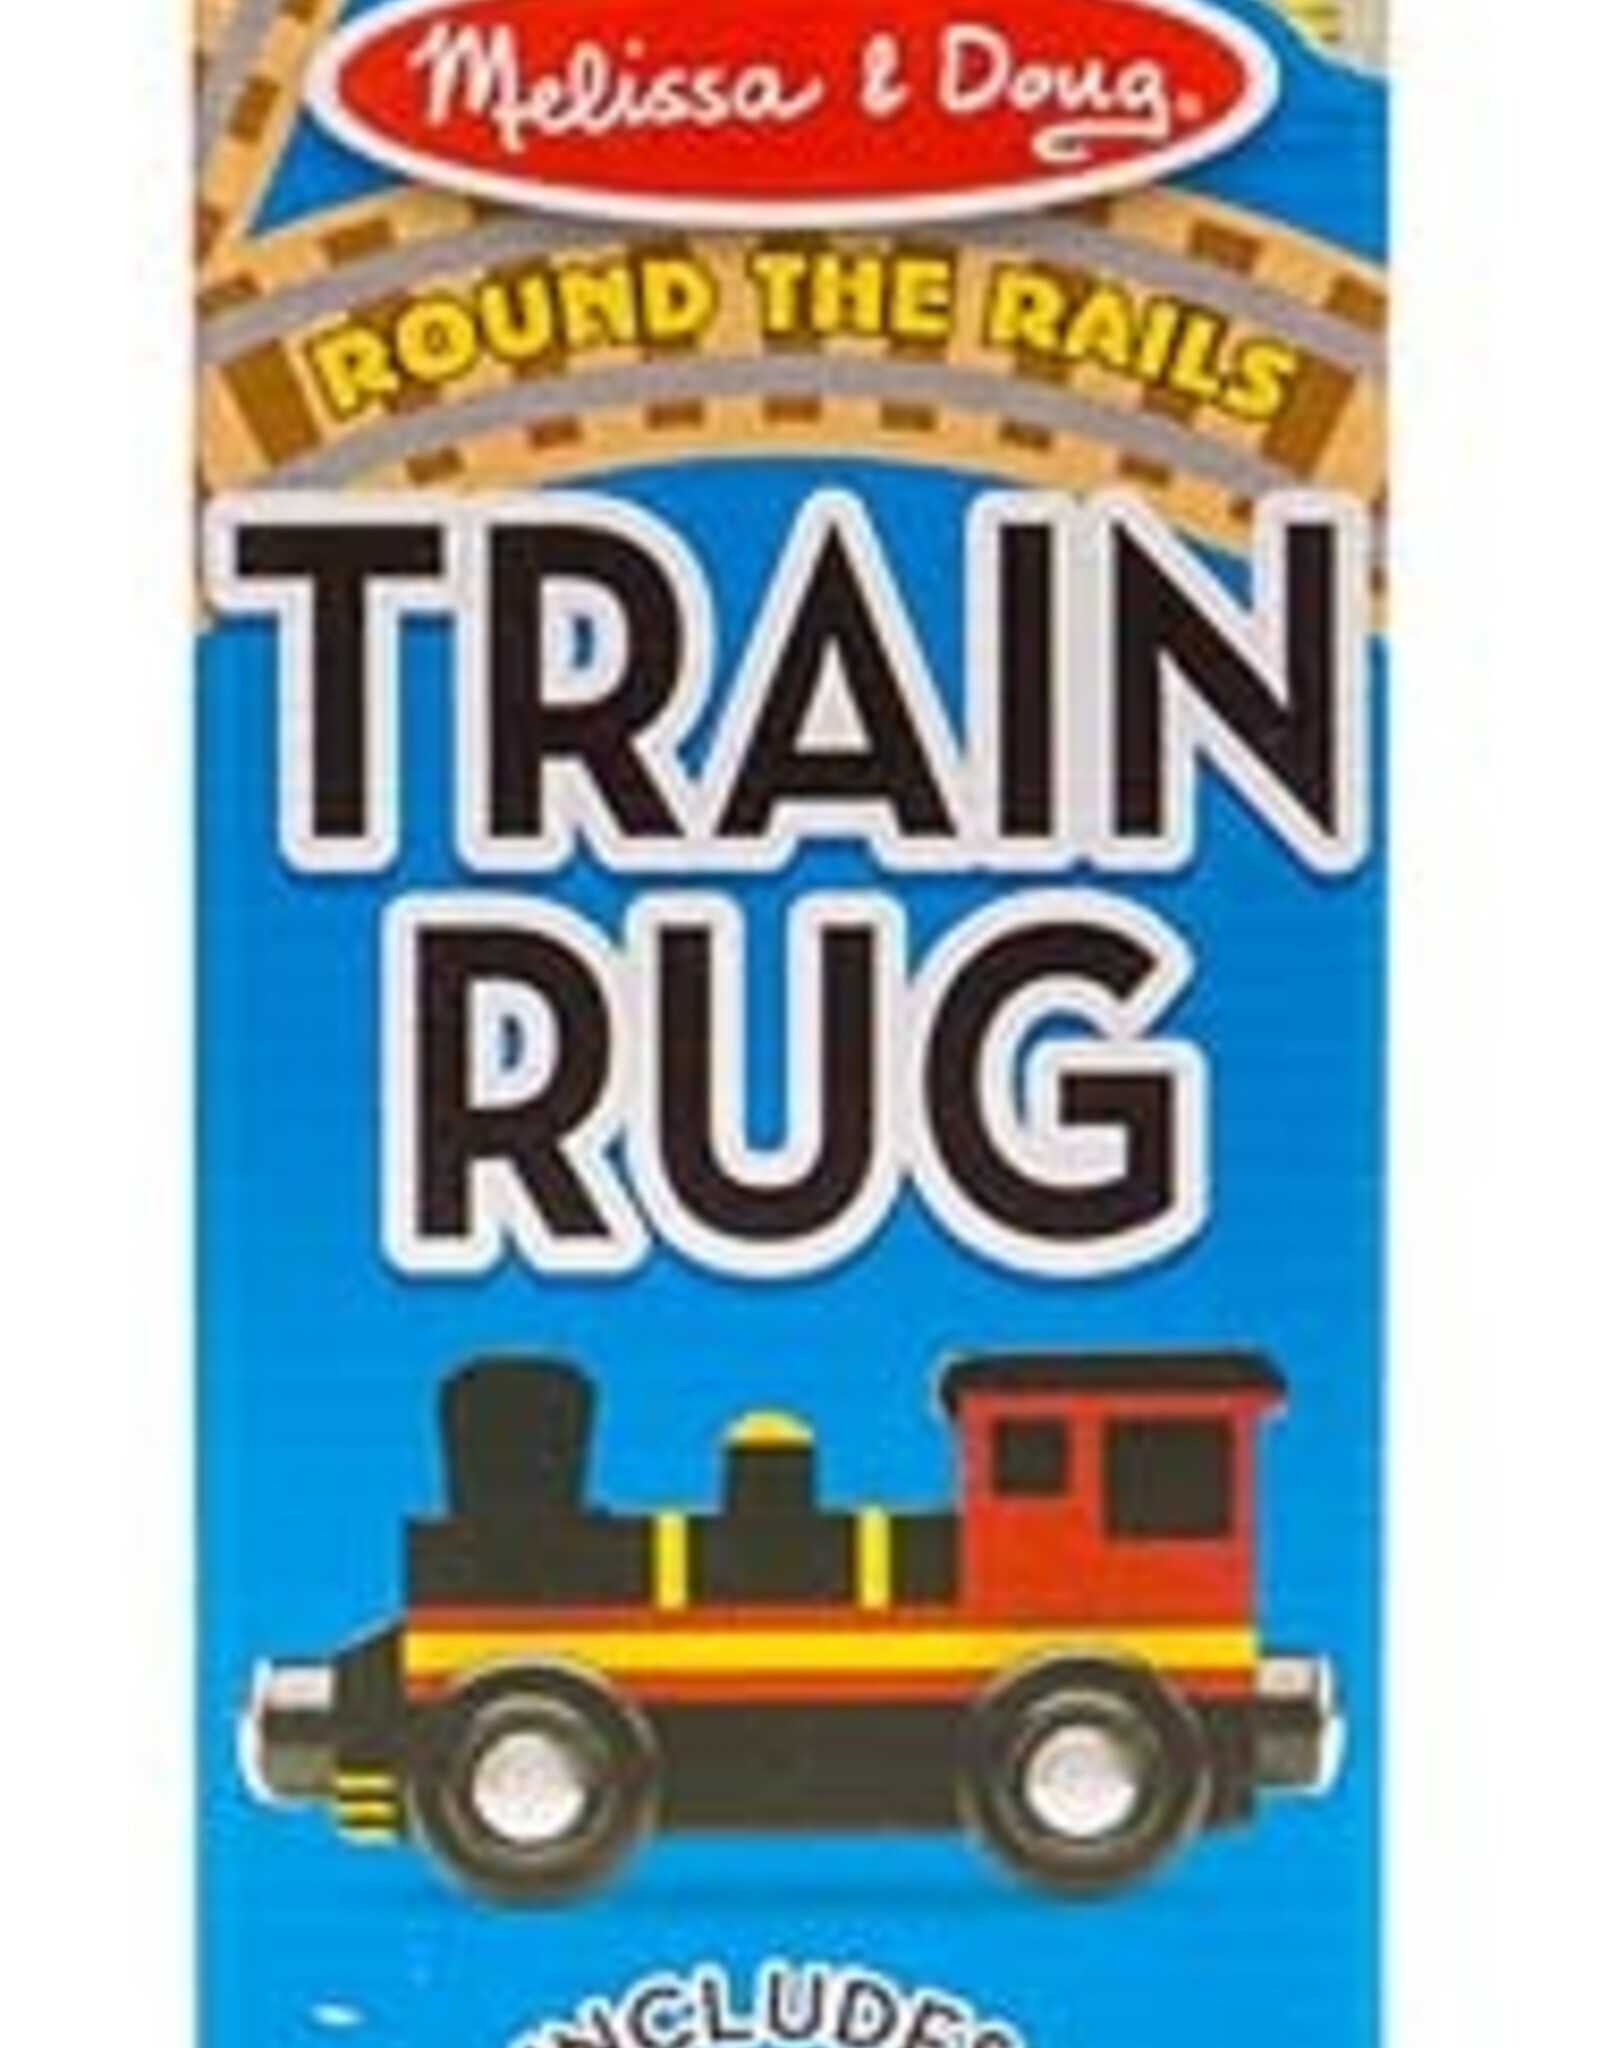 MELISSA & DOUG Round the Rails Train Rug